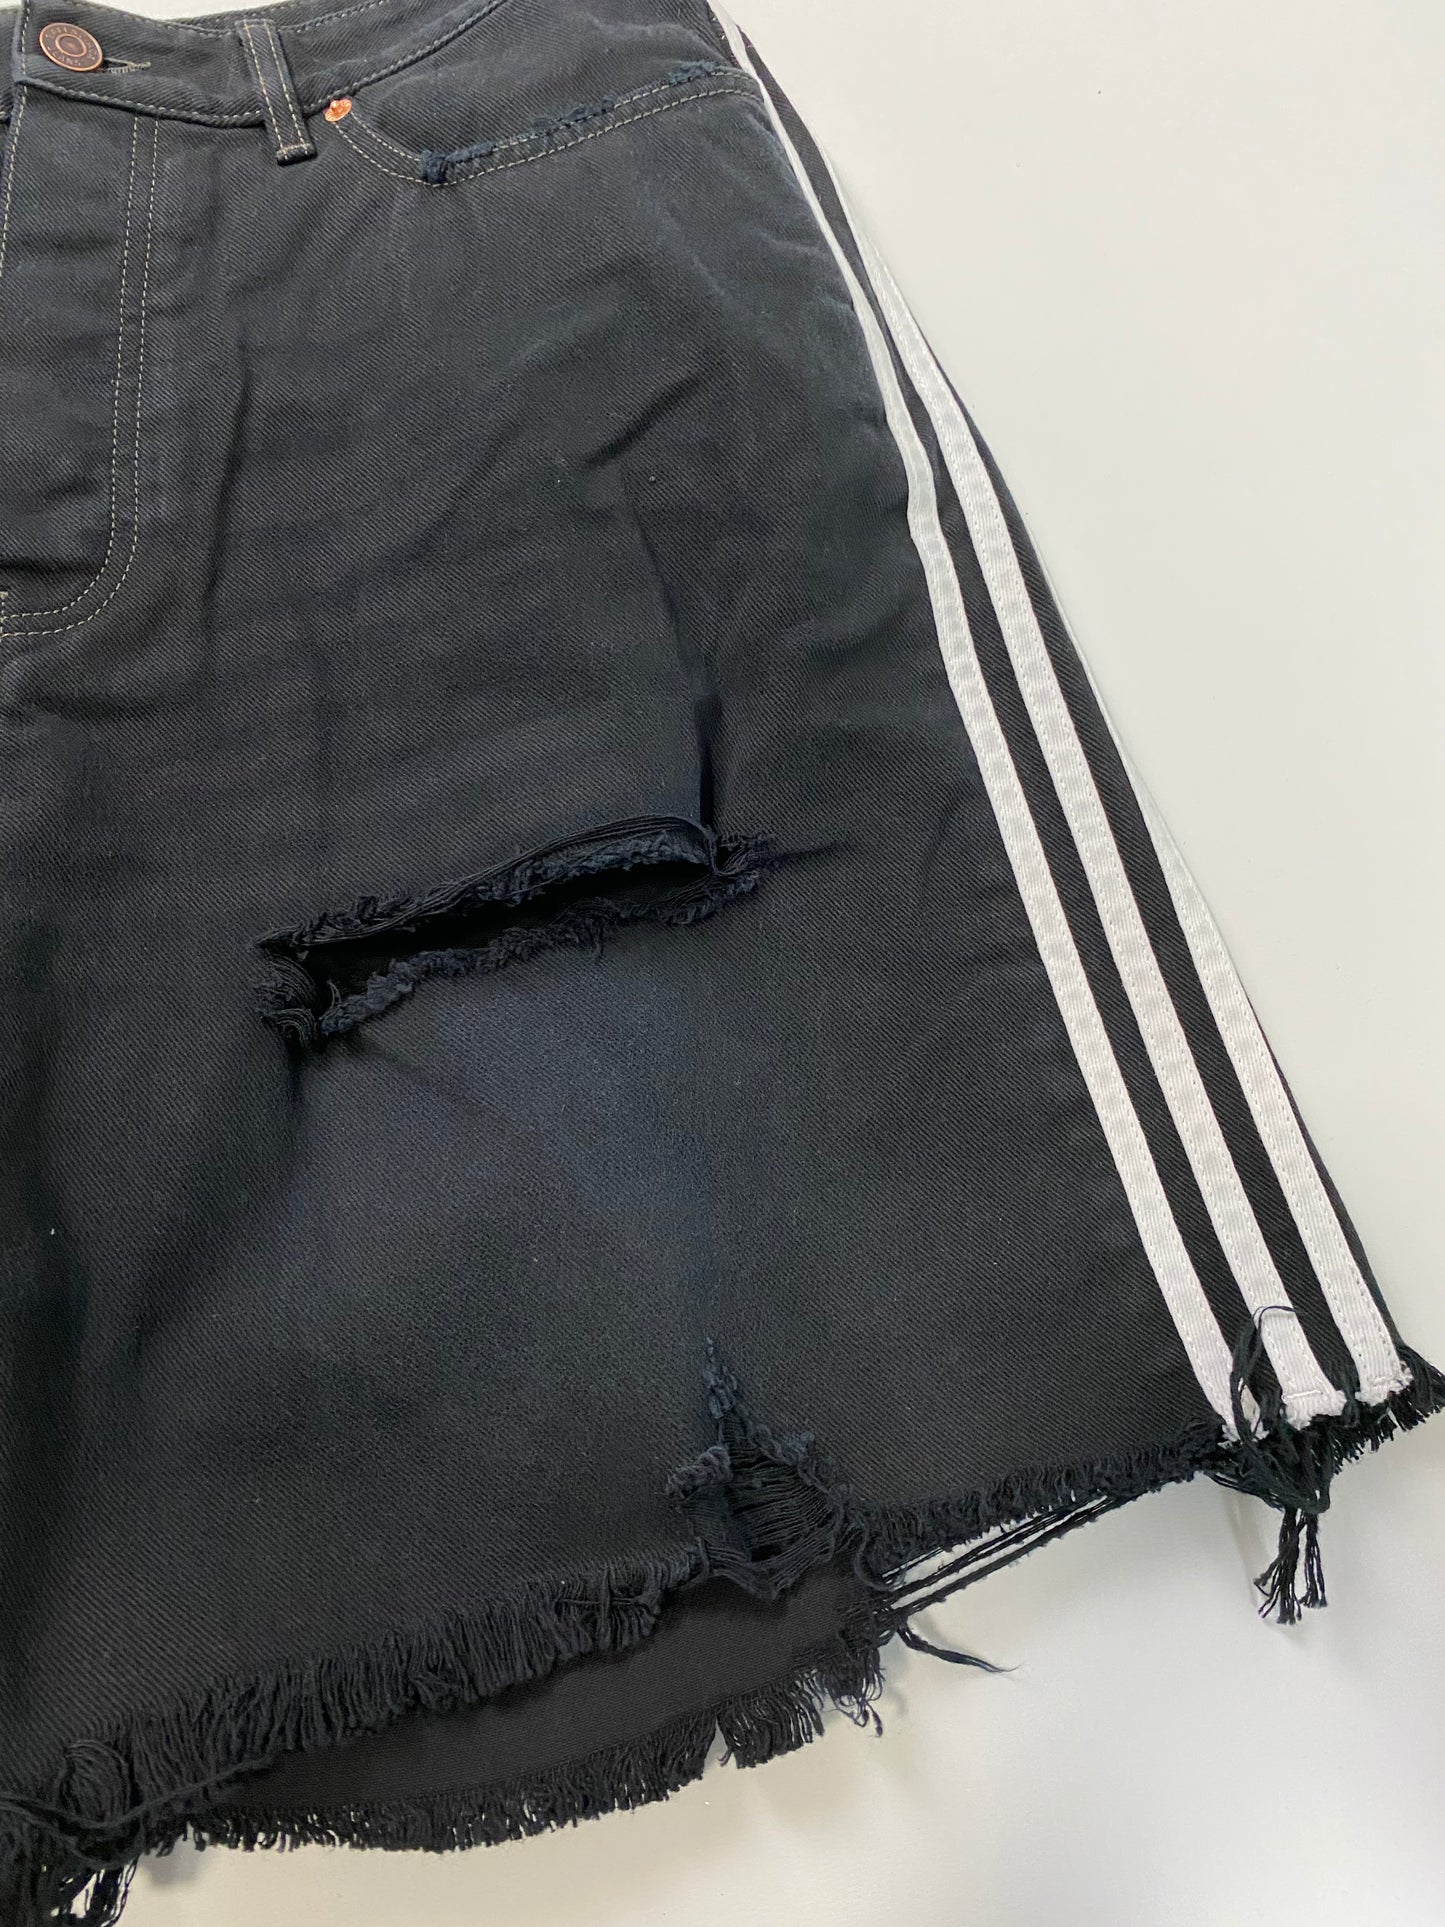 Balenciaga x Adidas distressed ripped shorts in black SZ:S